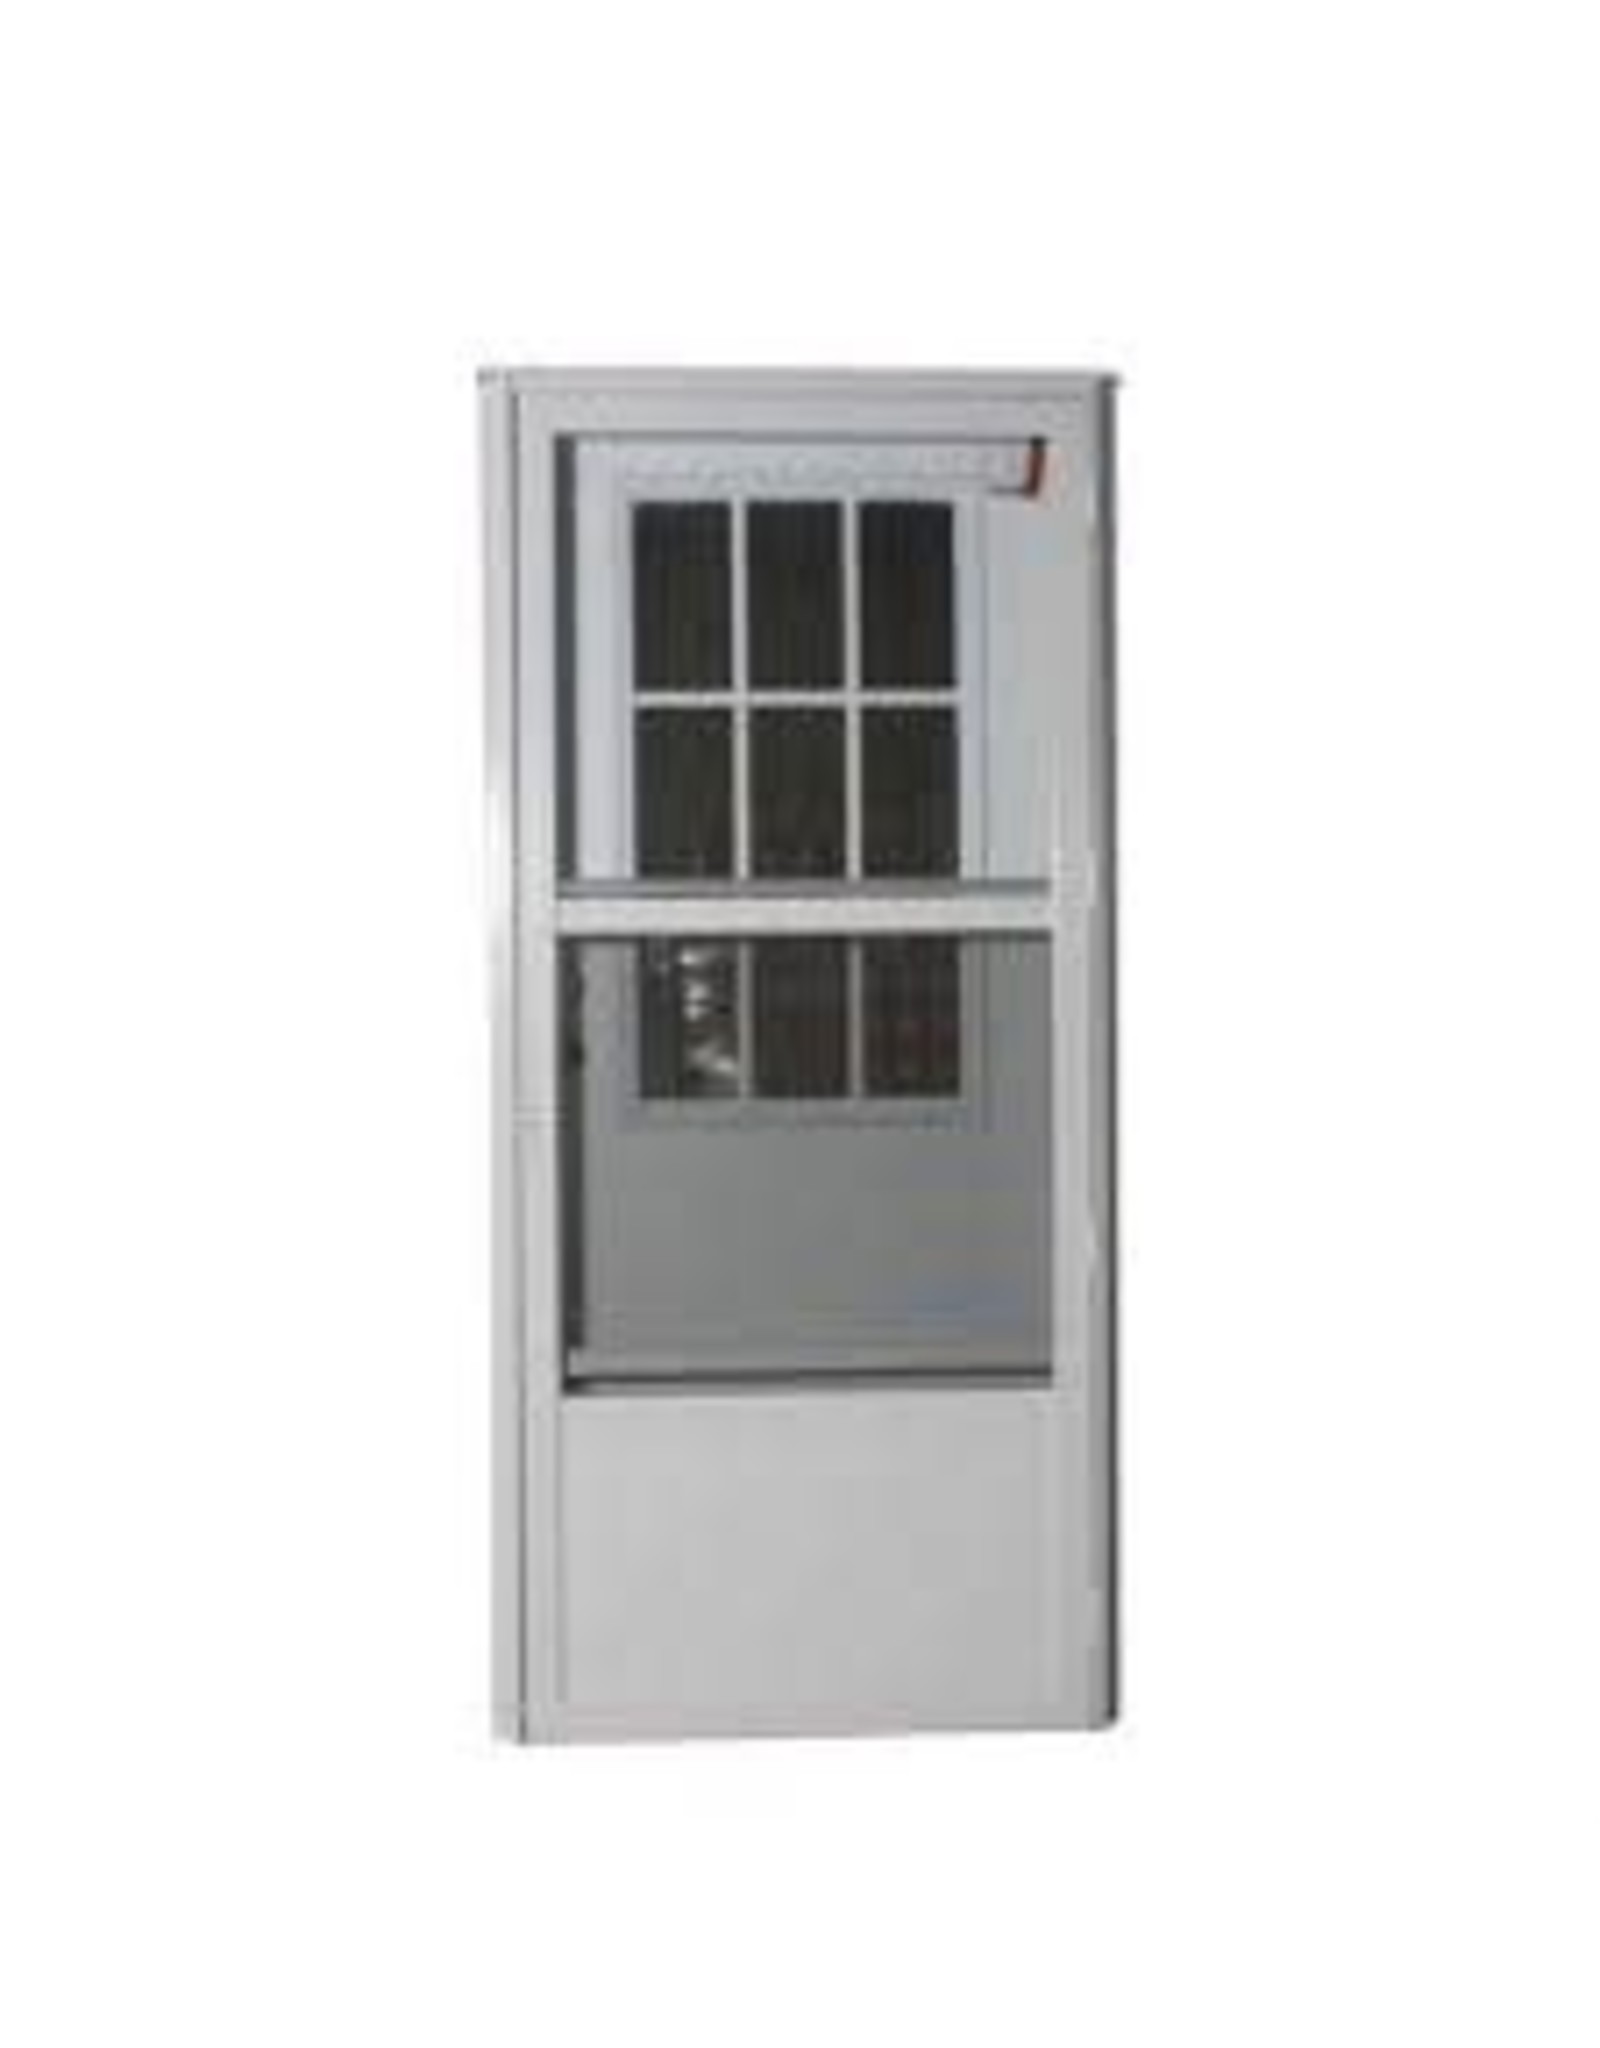 34 X 76 RH RAISED PANEL COMBINATION DOOR W/ COTTAGE WINDOW